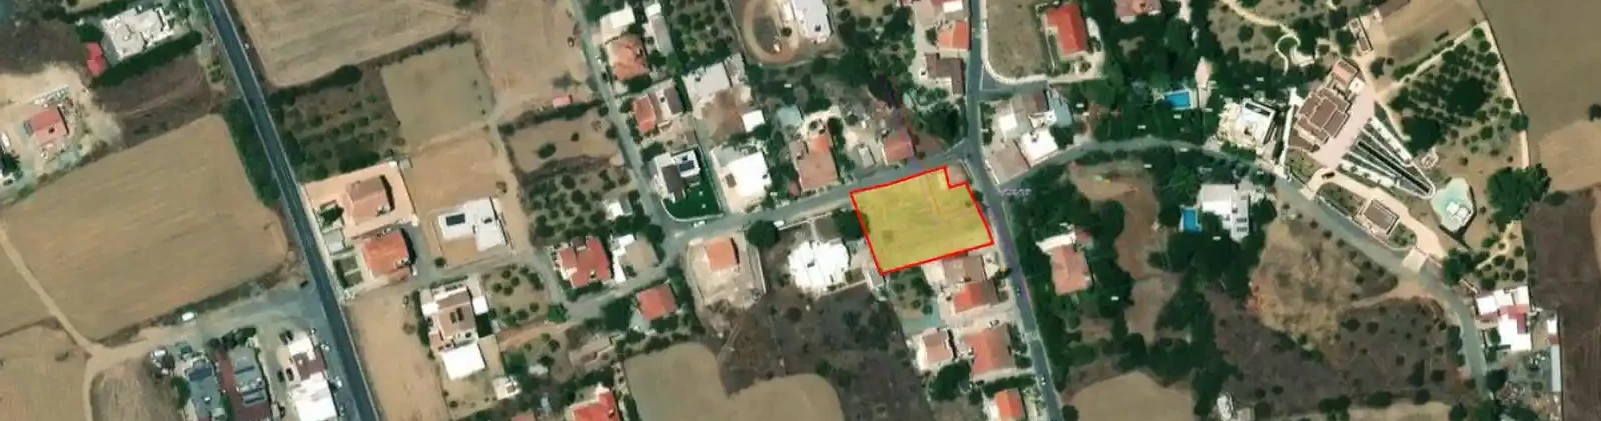 Residential land 1455 m² €165.000, image 1